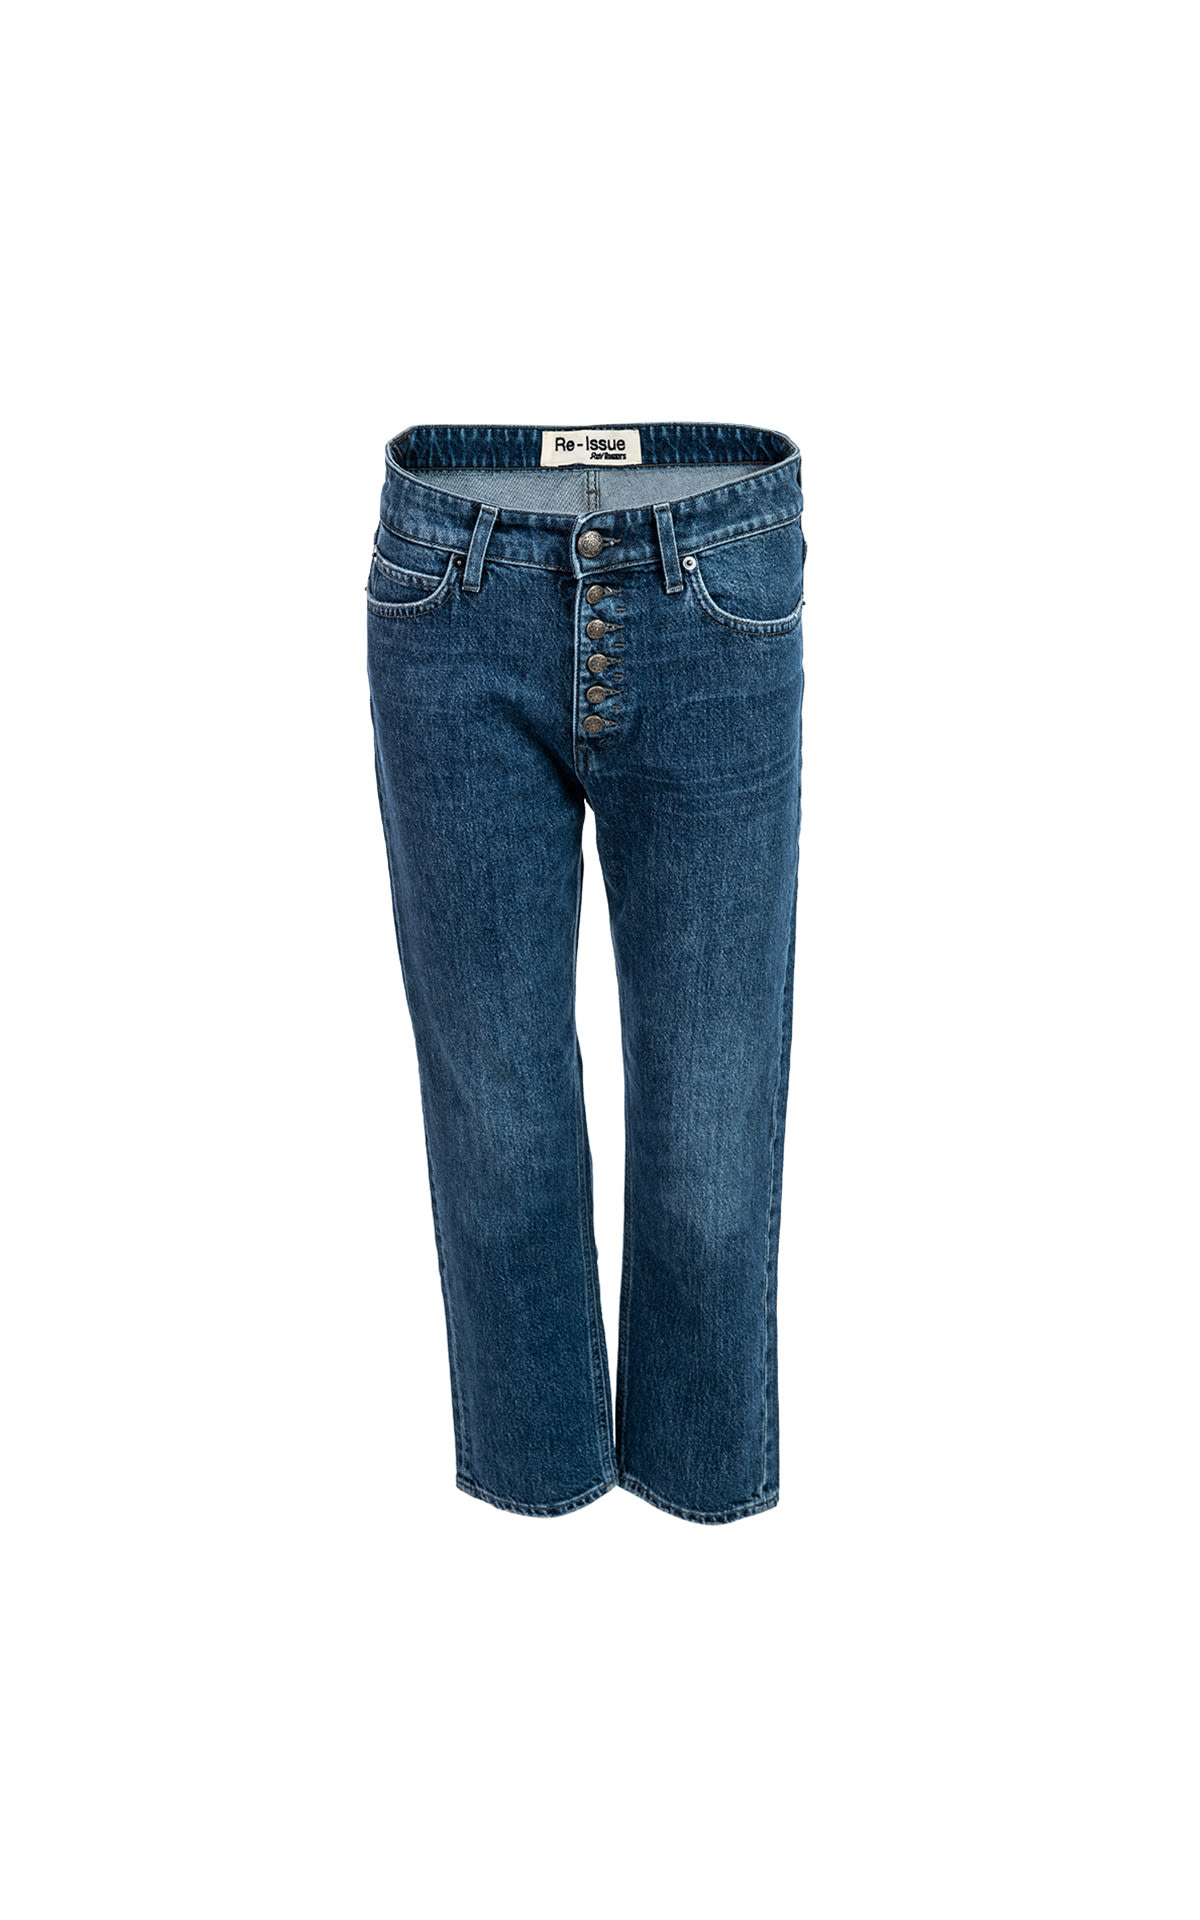  Roy Roger's Denim jeans